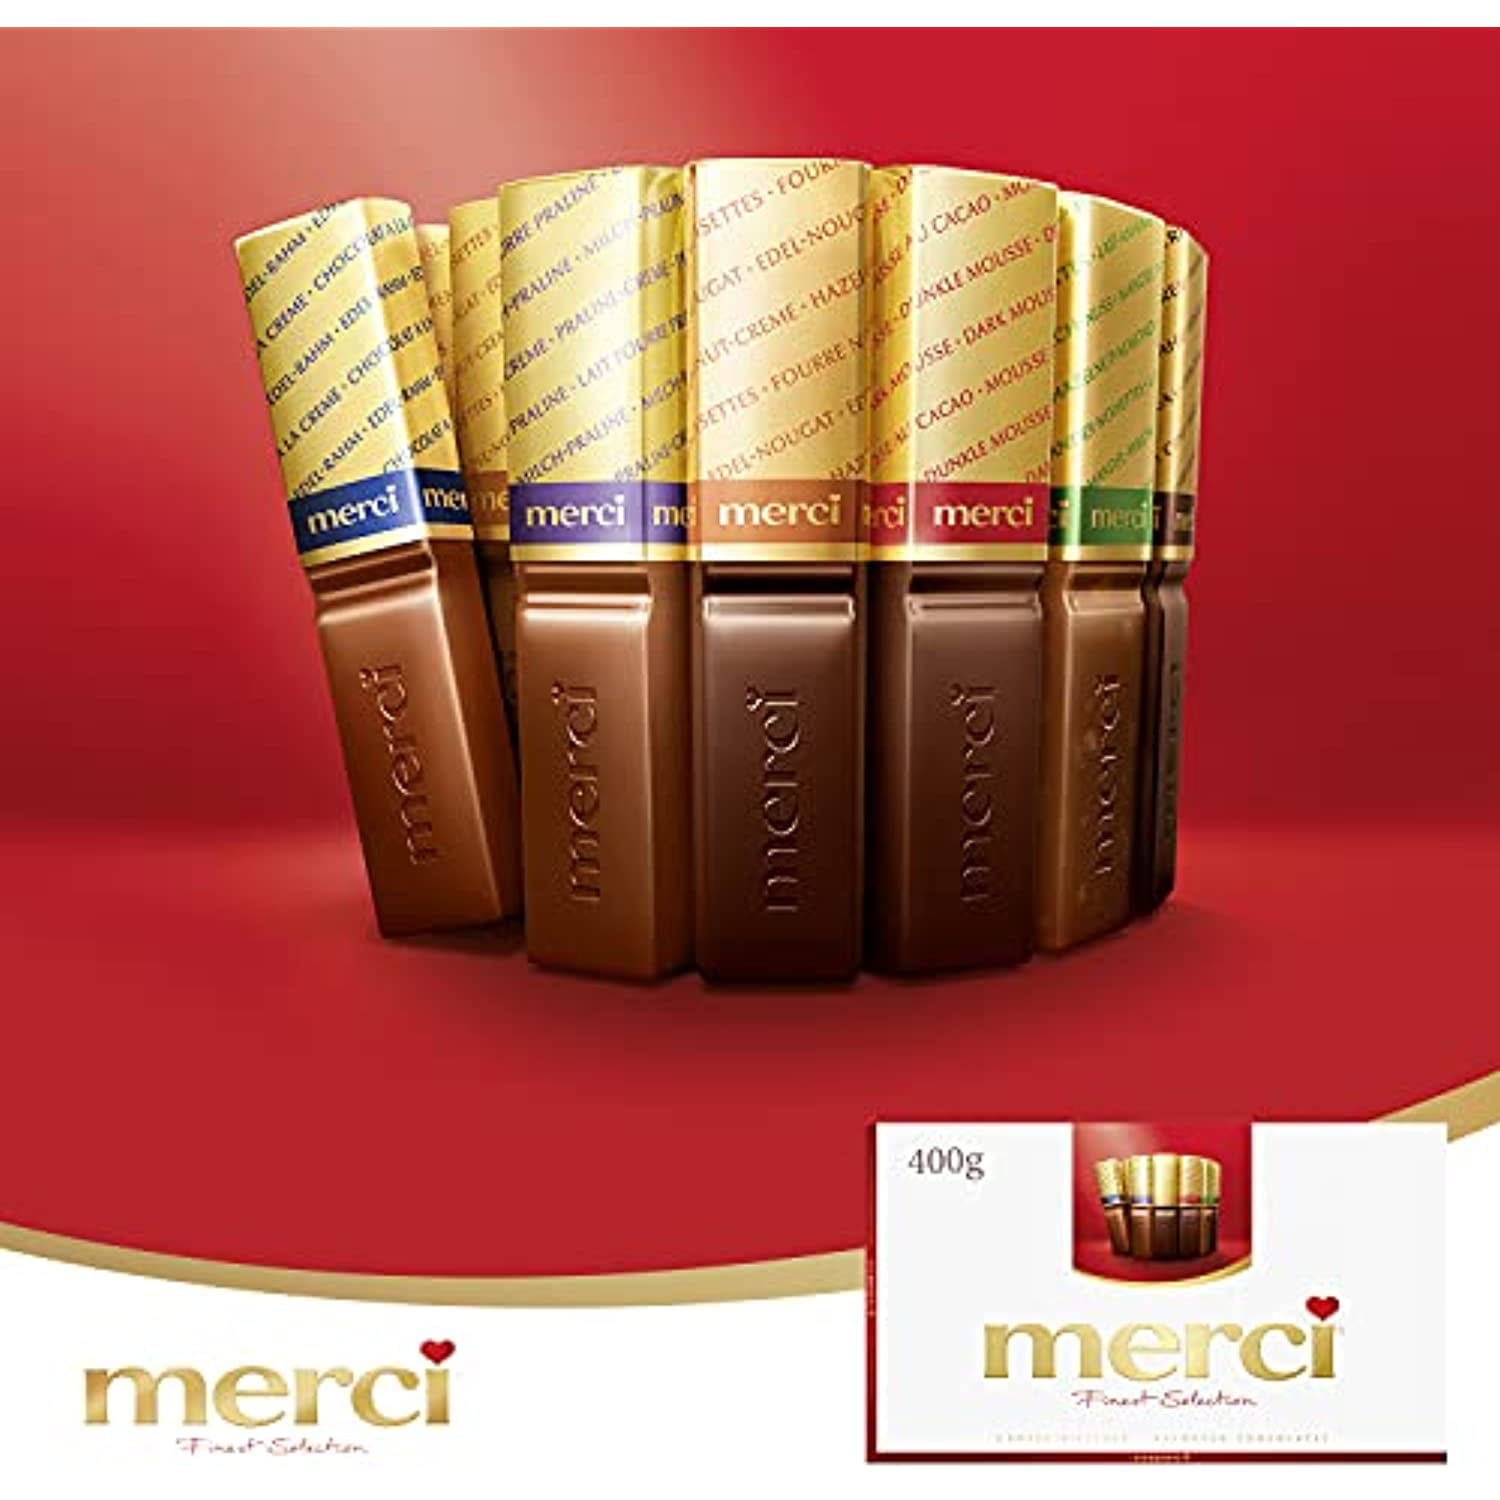 Merci Mousse Au Chocolat Finest Selection